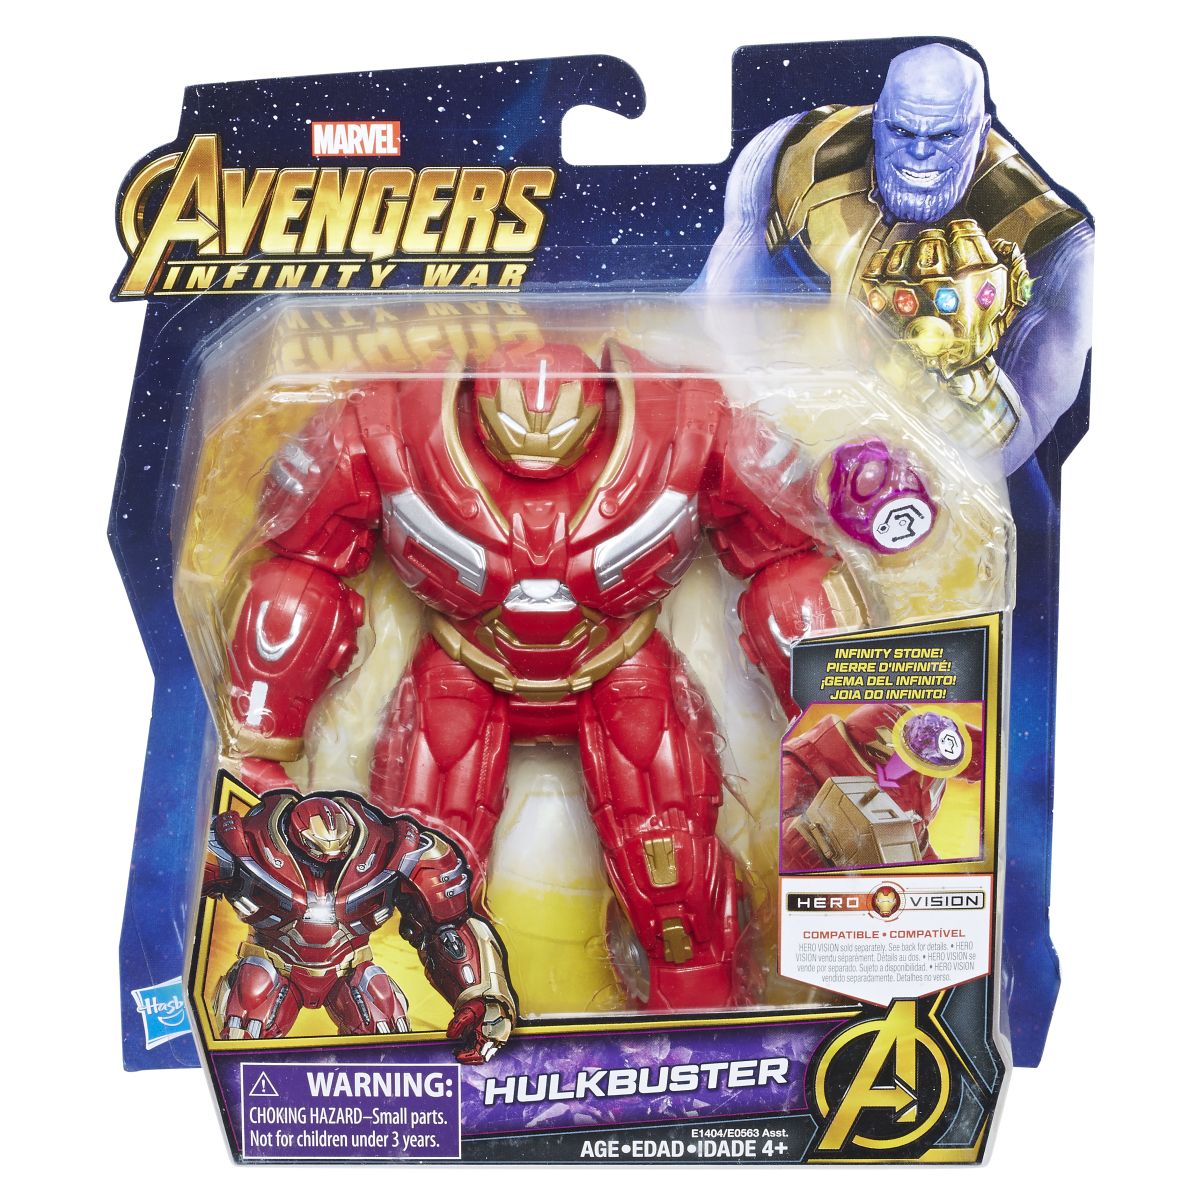 Marvel Avengers Infinity War 6 Inch Deluxe Figure Assortment Hulkbuster In Pkg